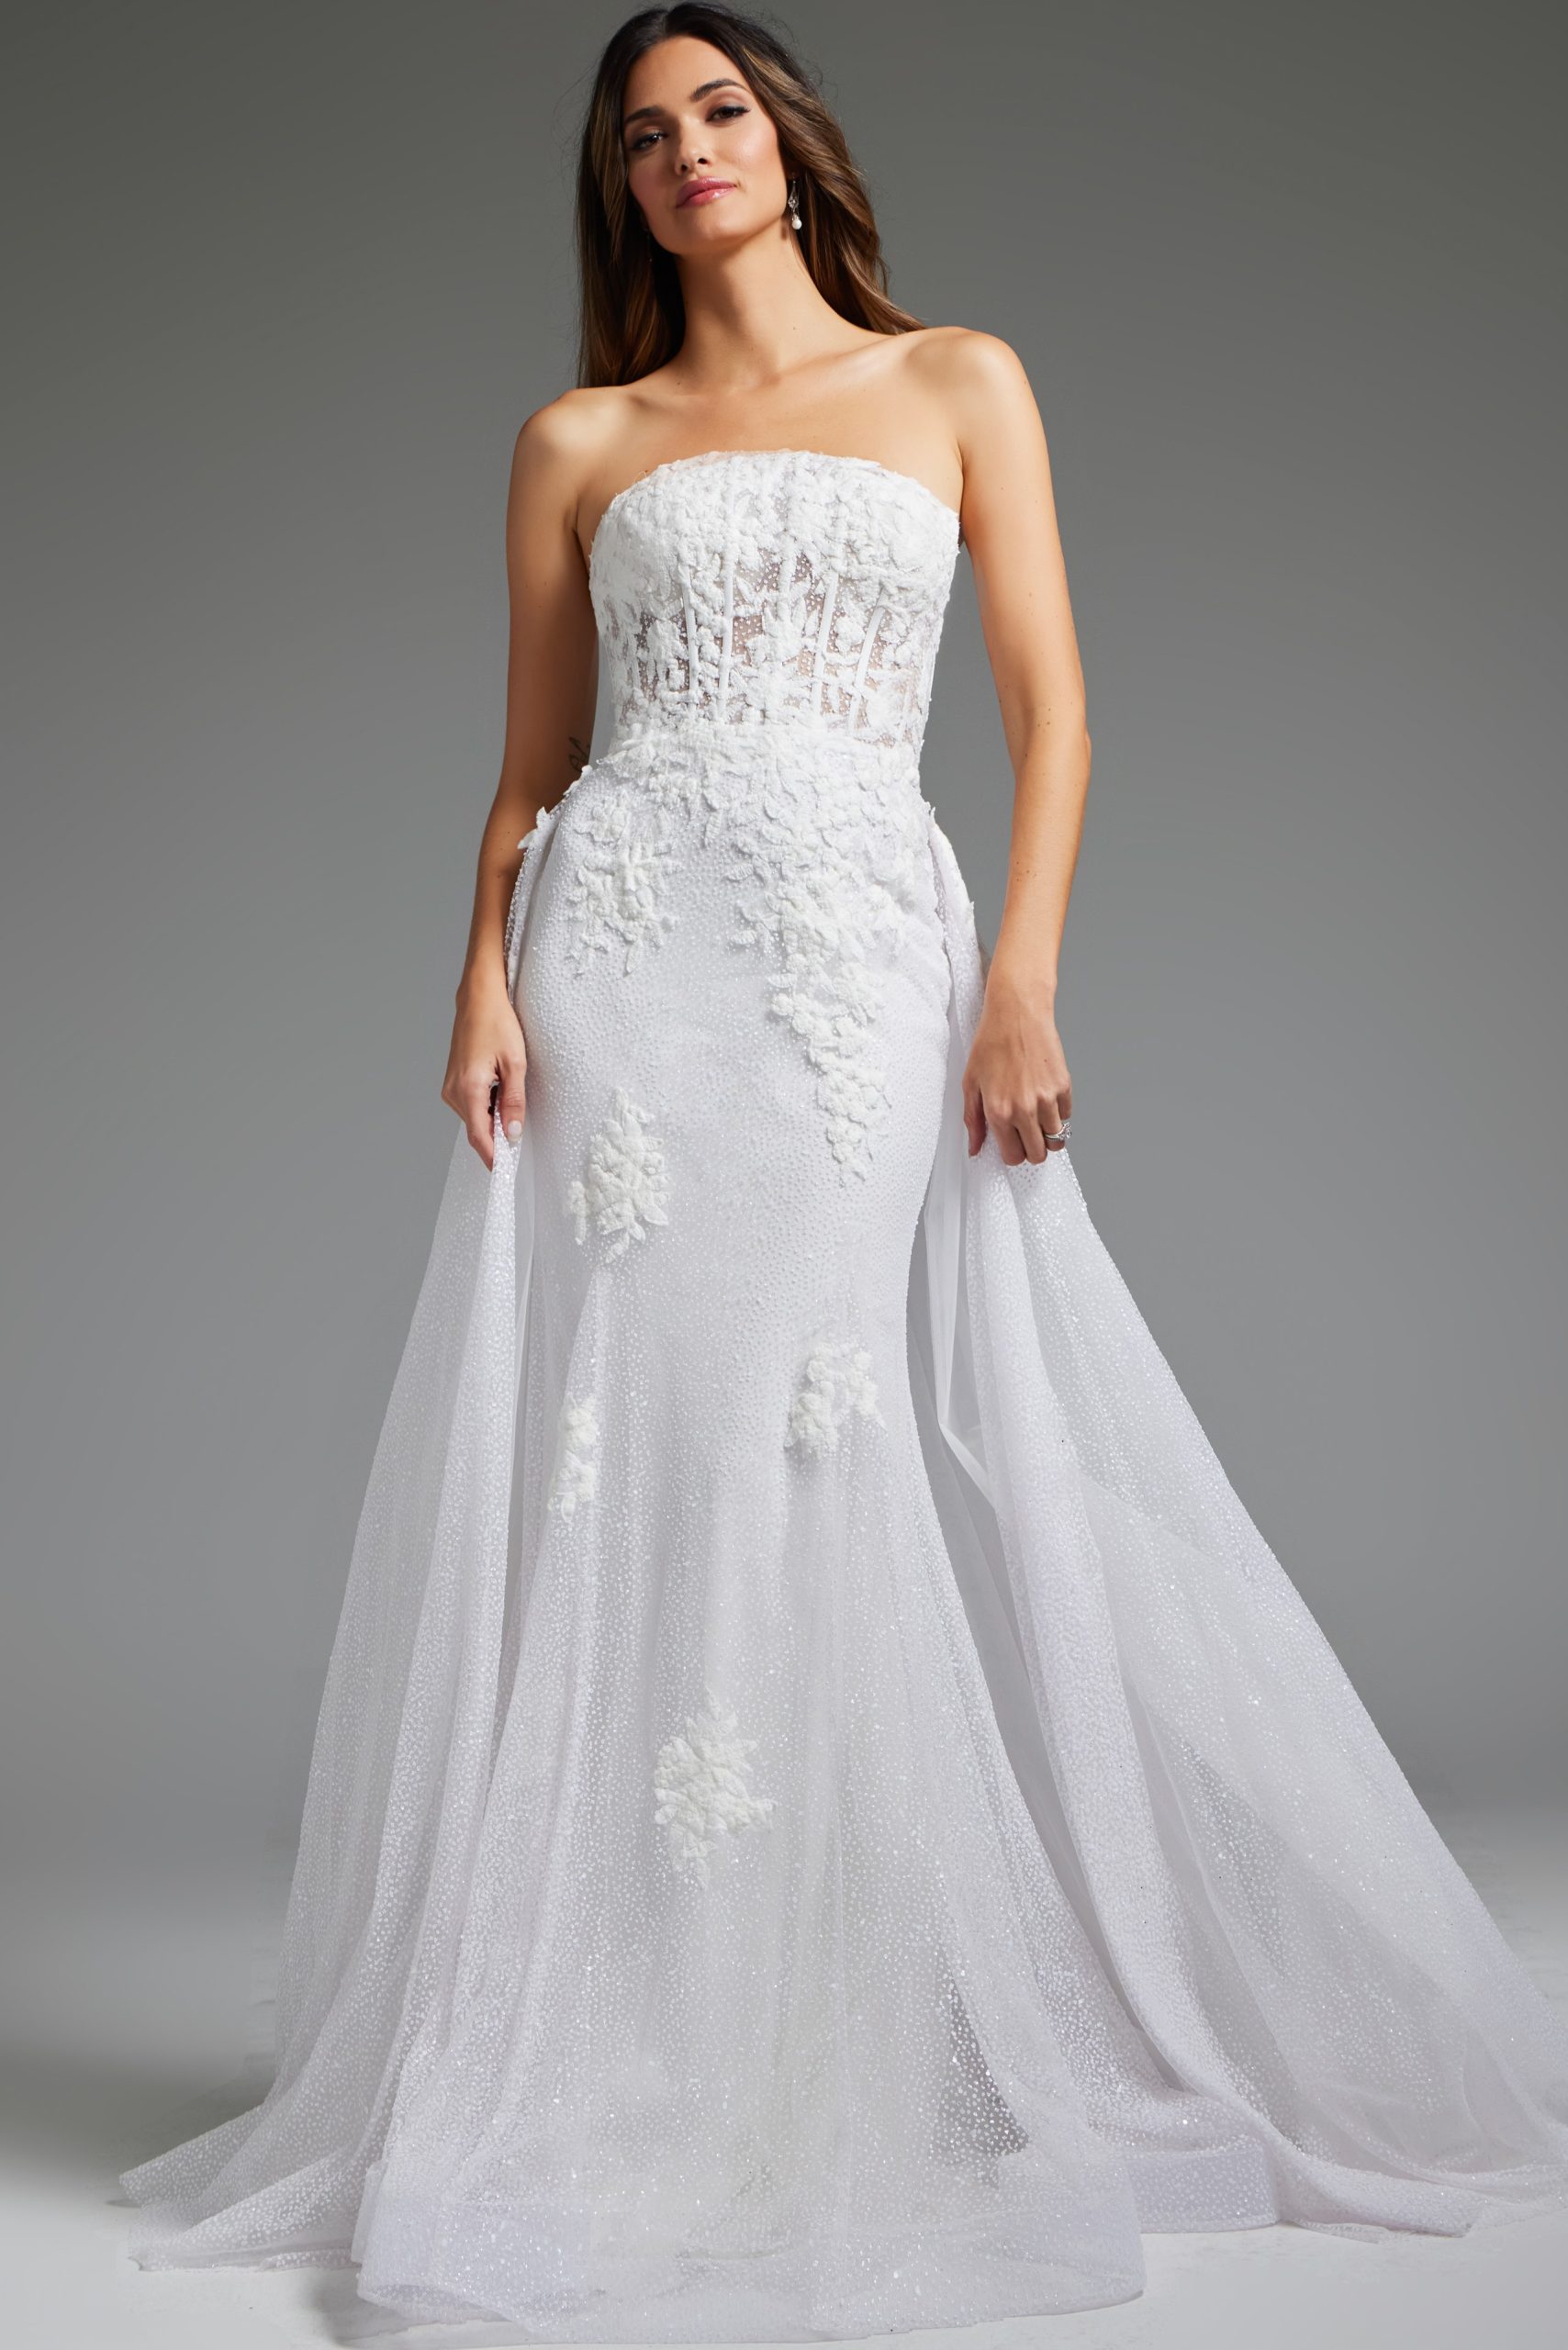 Off White Strapless Gorset Bodice Wedding Gown JB24560